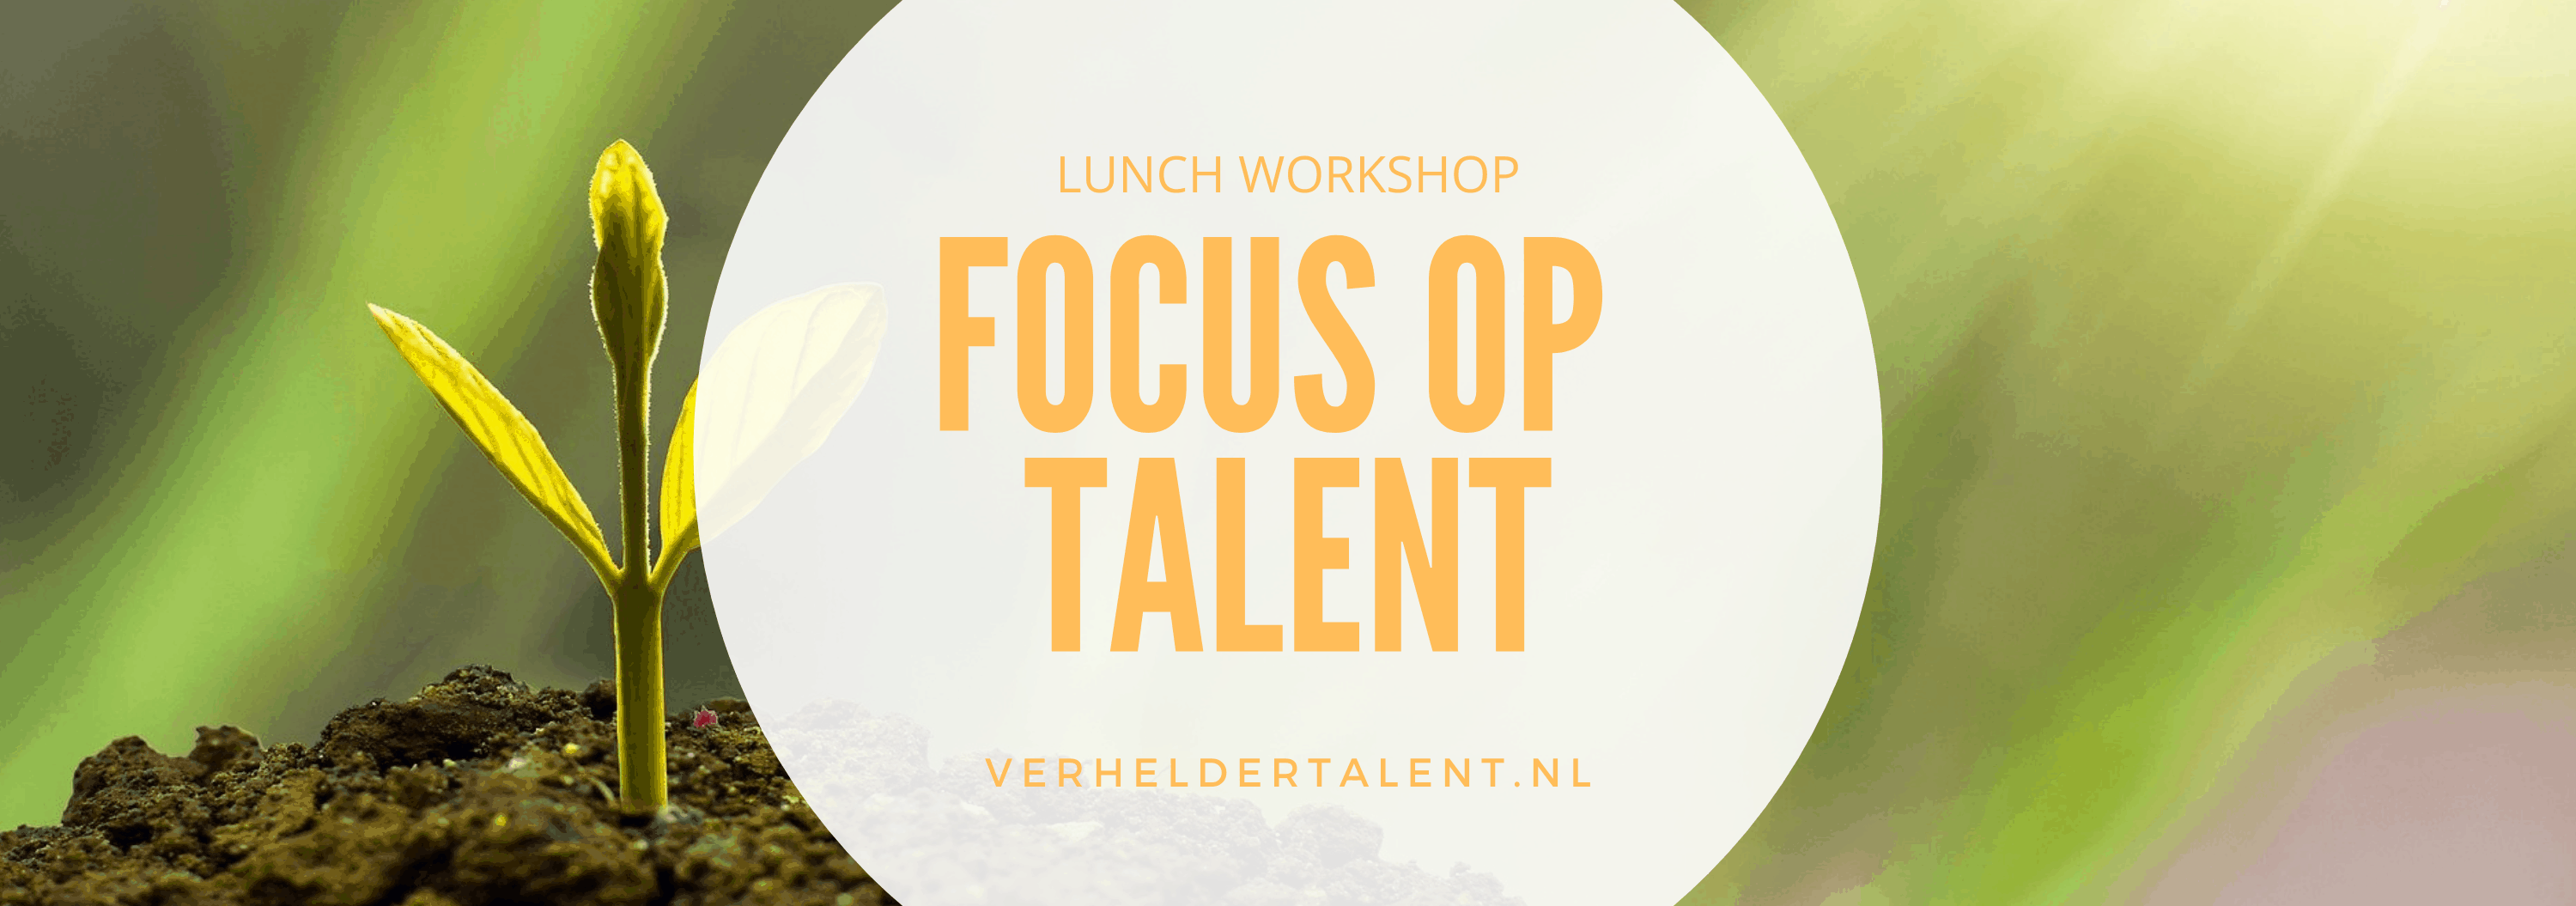 Lunch workshop focus op talent